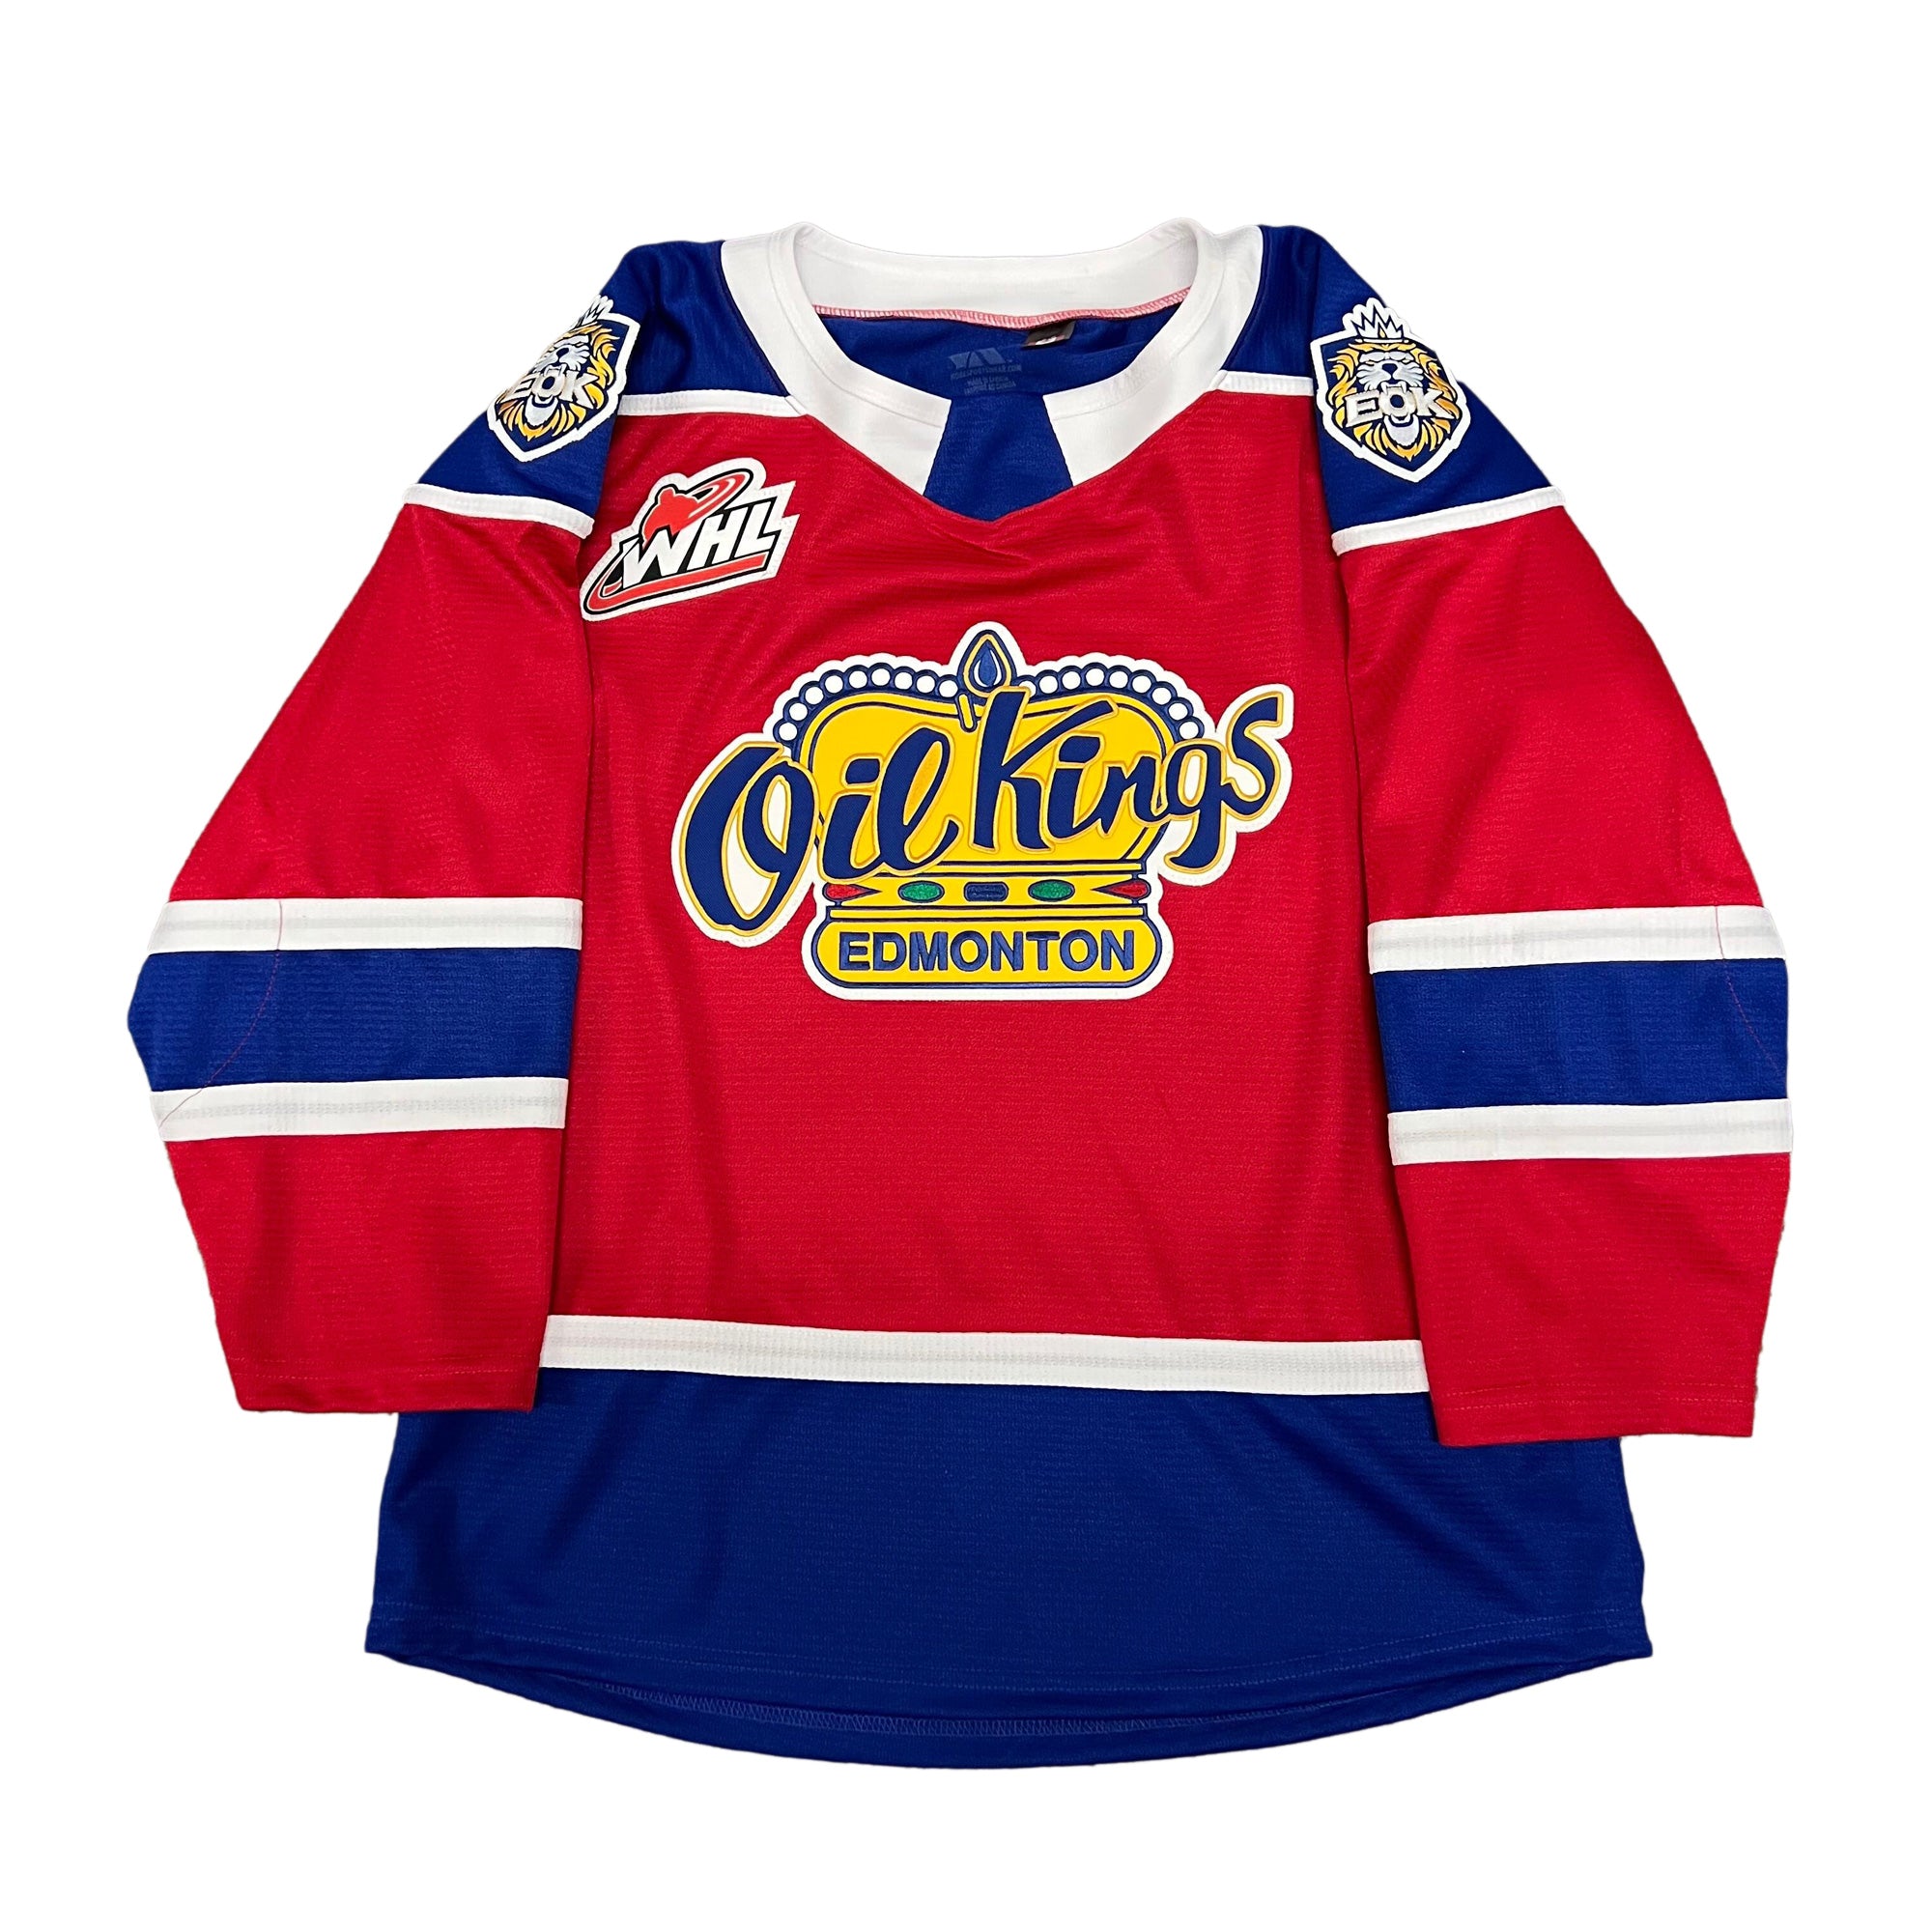 Kobe K3G Edmonton Oilers Hockey Jerseys